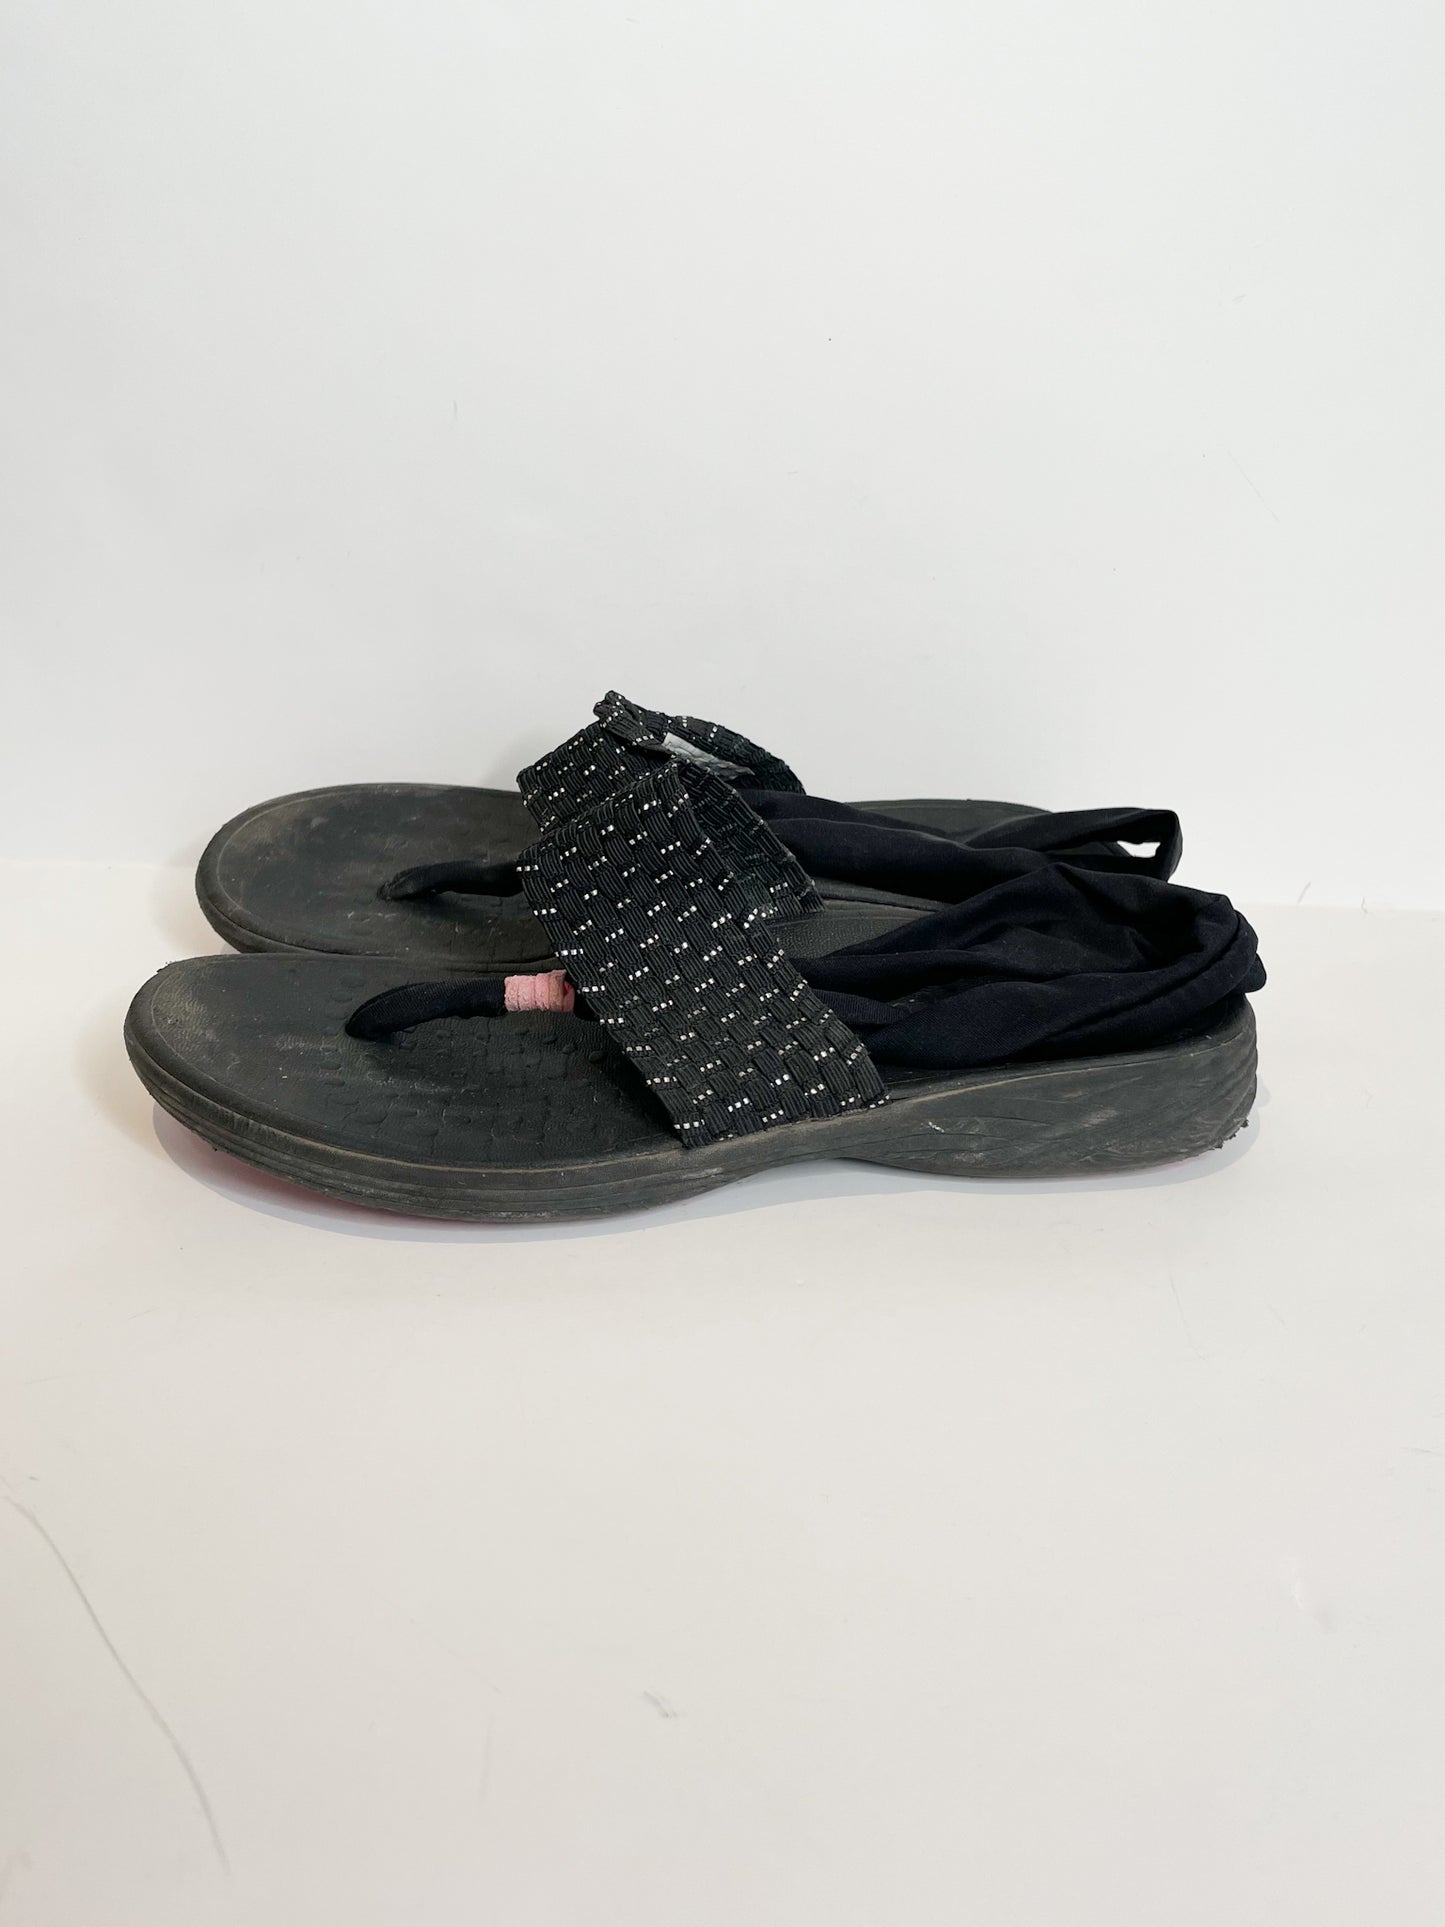 Vionic Black Pink T-Strap Sandals - Size 9